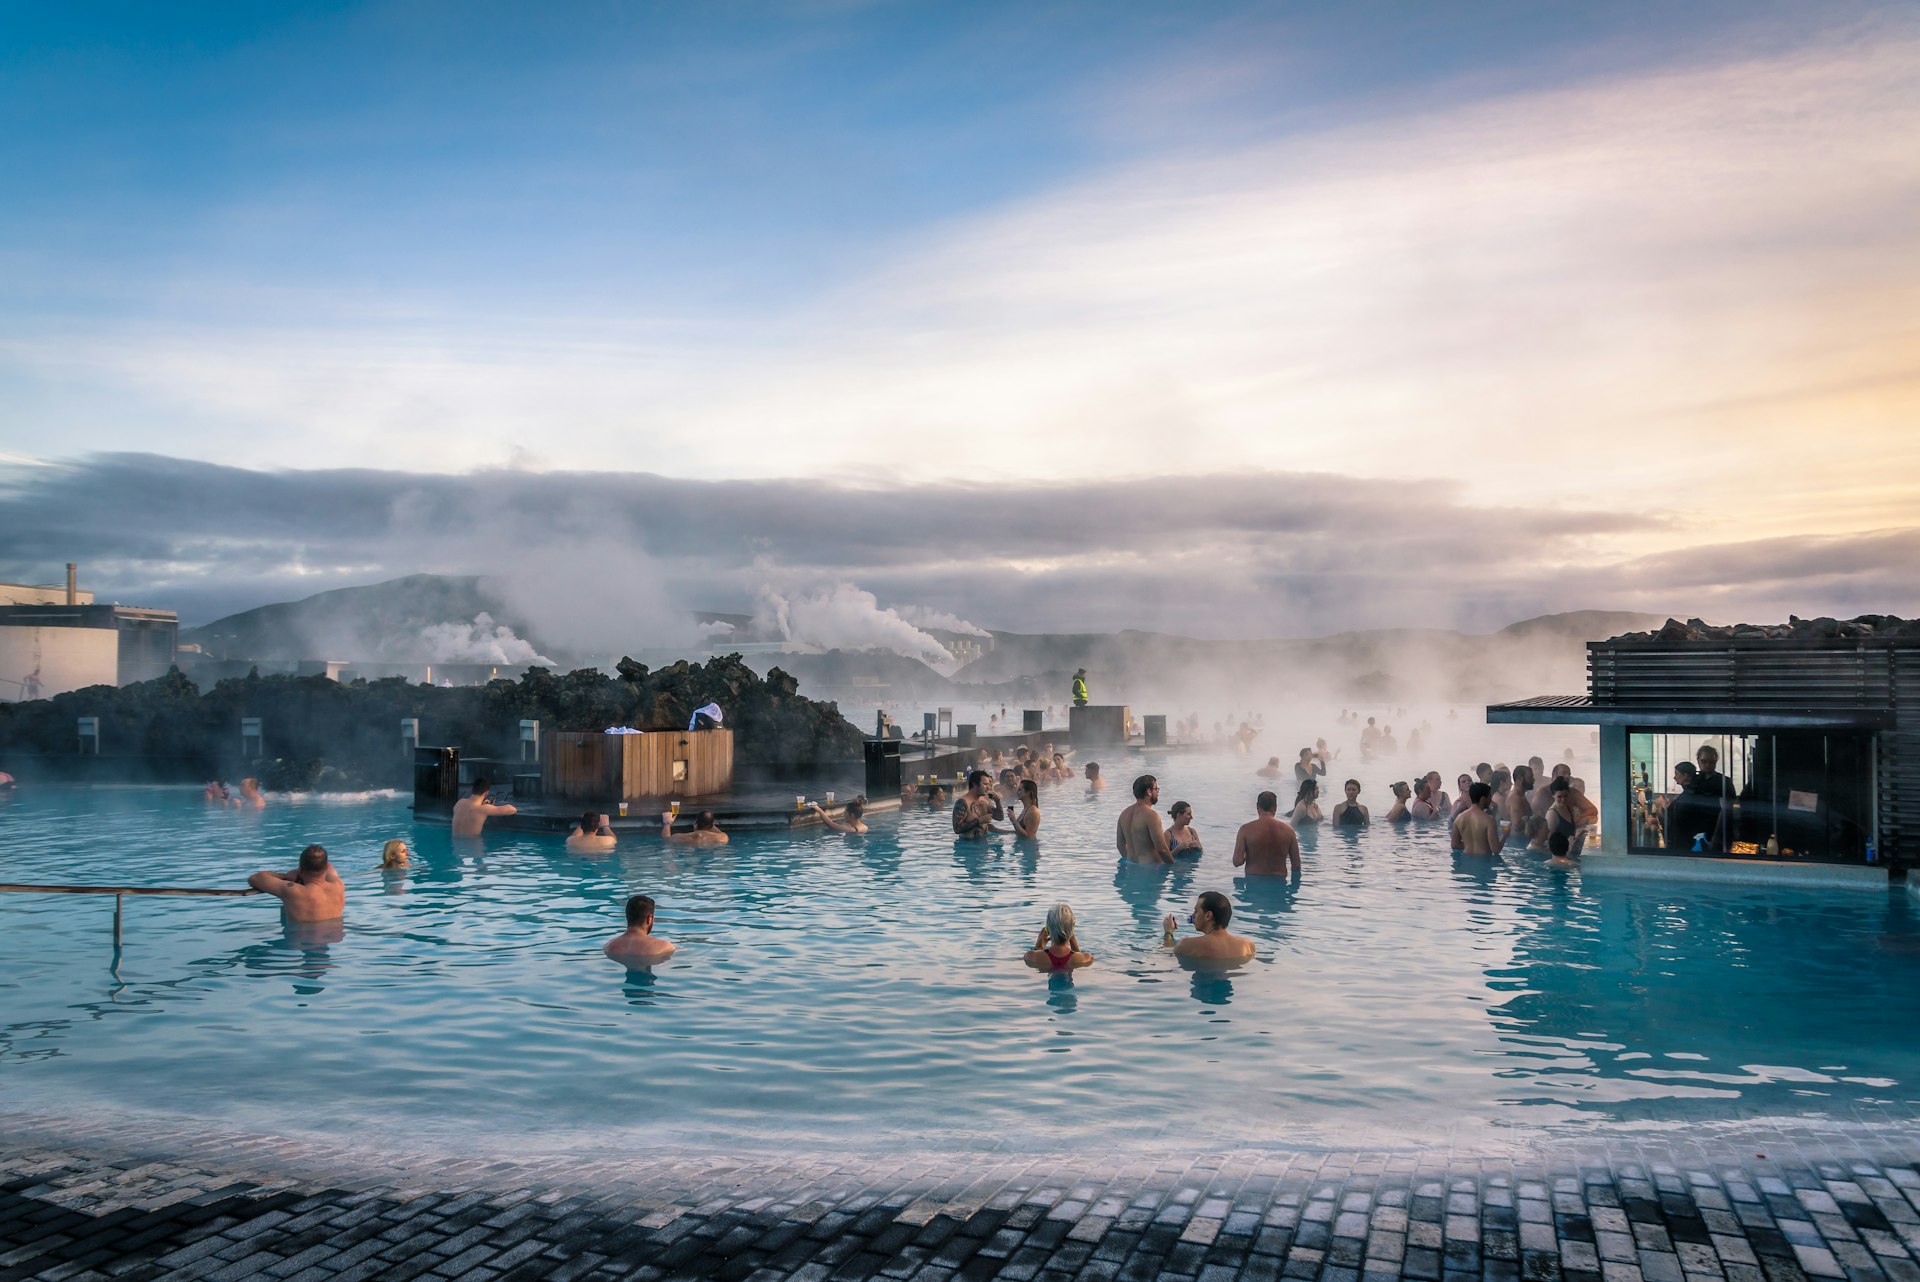 People bathing in the hot waters of Blue Lagoon, a geothermal bath resort